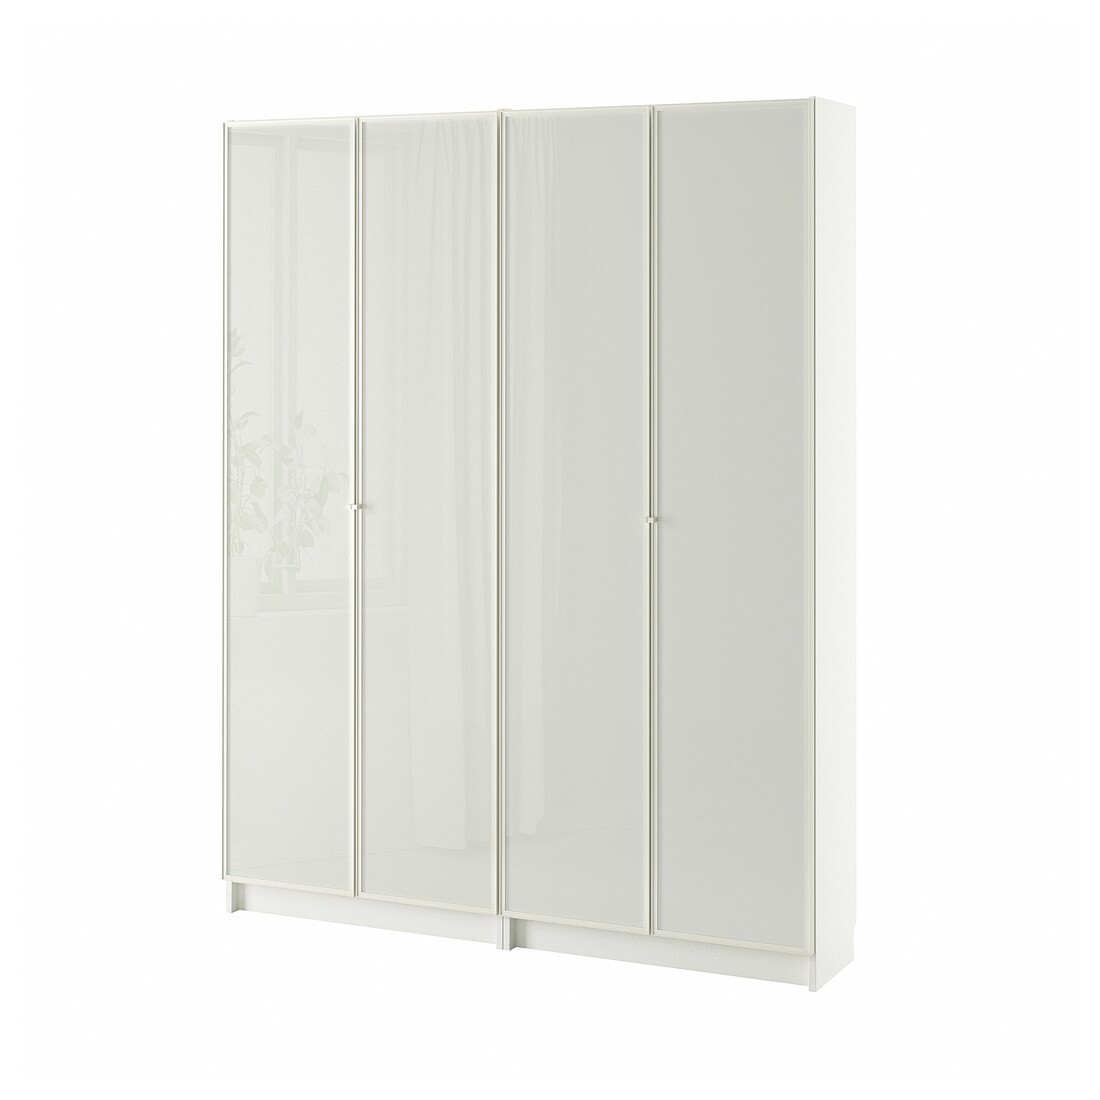 IKEA BILLY БИЛЛИ / HÖGBO ХОГБО Комбинация стеллажей стеклянные двери, белый, 160 х 202 см 49483662 494.836.62